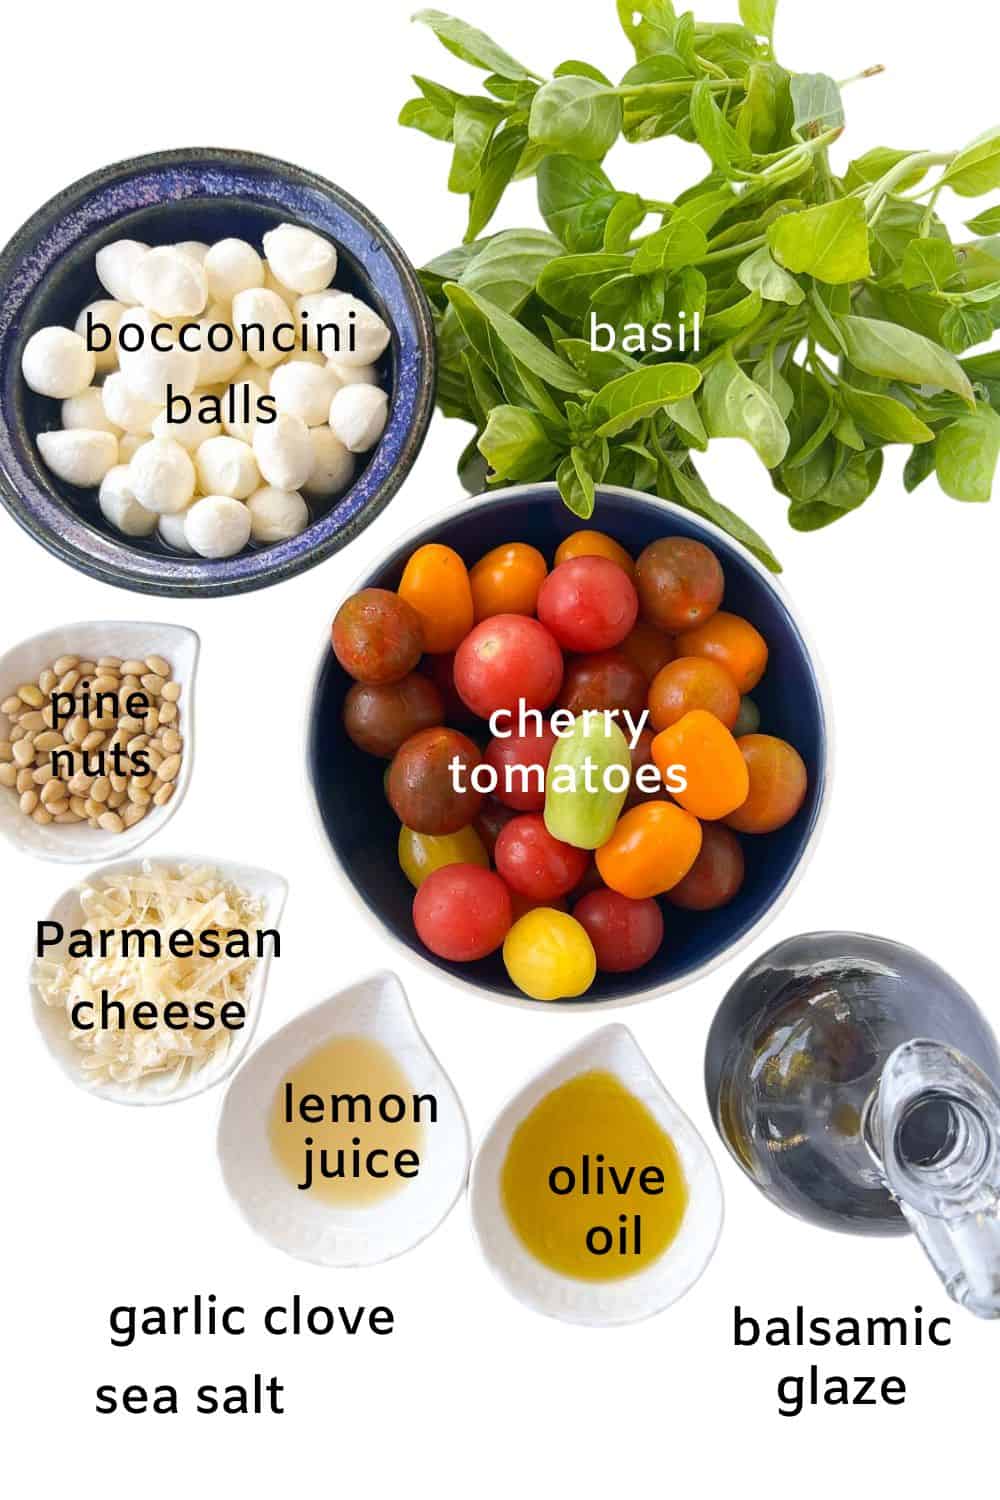 Ingredients for Pesto Caprese Salad: basil, tomatoes, bocconcini balls, pine nuts, Parmesan cheese, garlic, lemon juice, olive oil, balsamic glaze, sea salt.